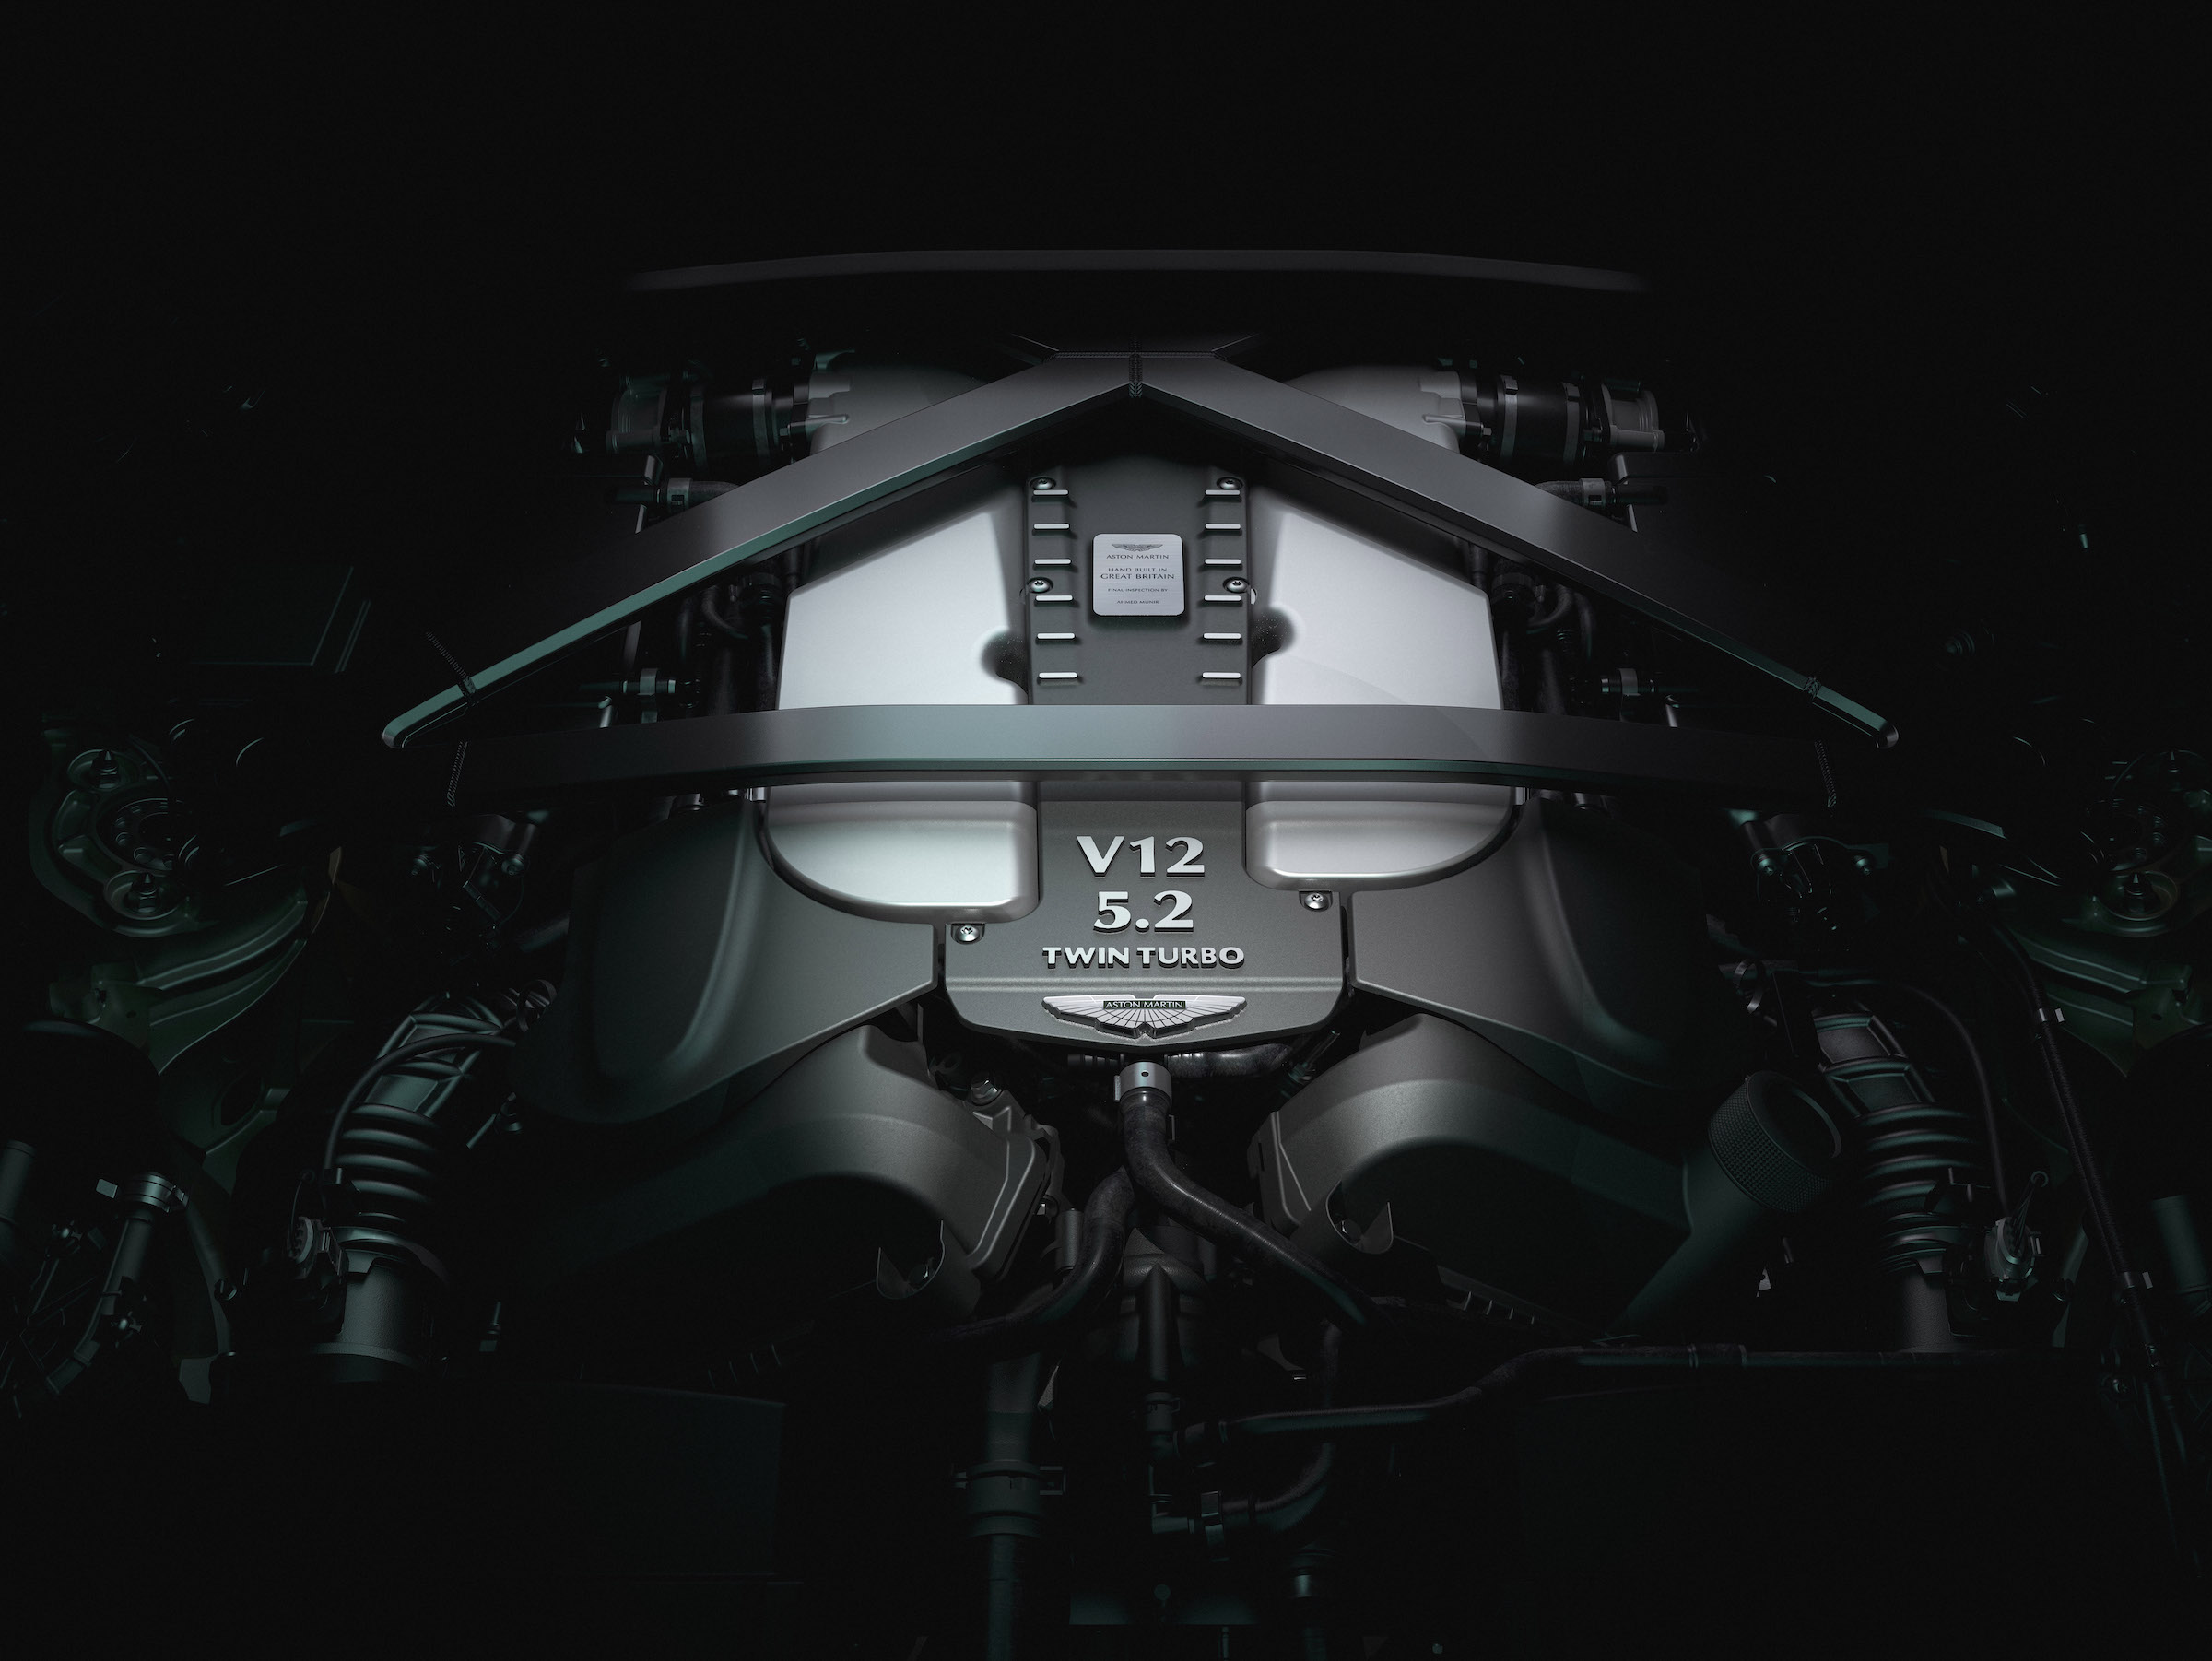 Aston Martin V12 Vantage engine